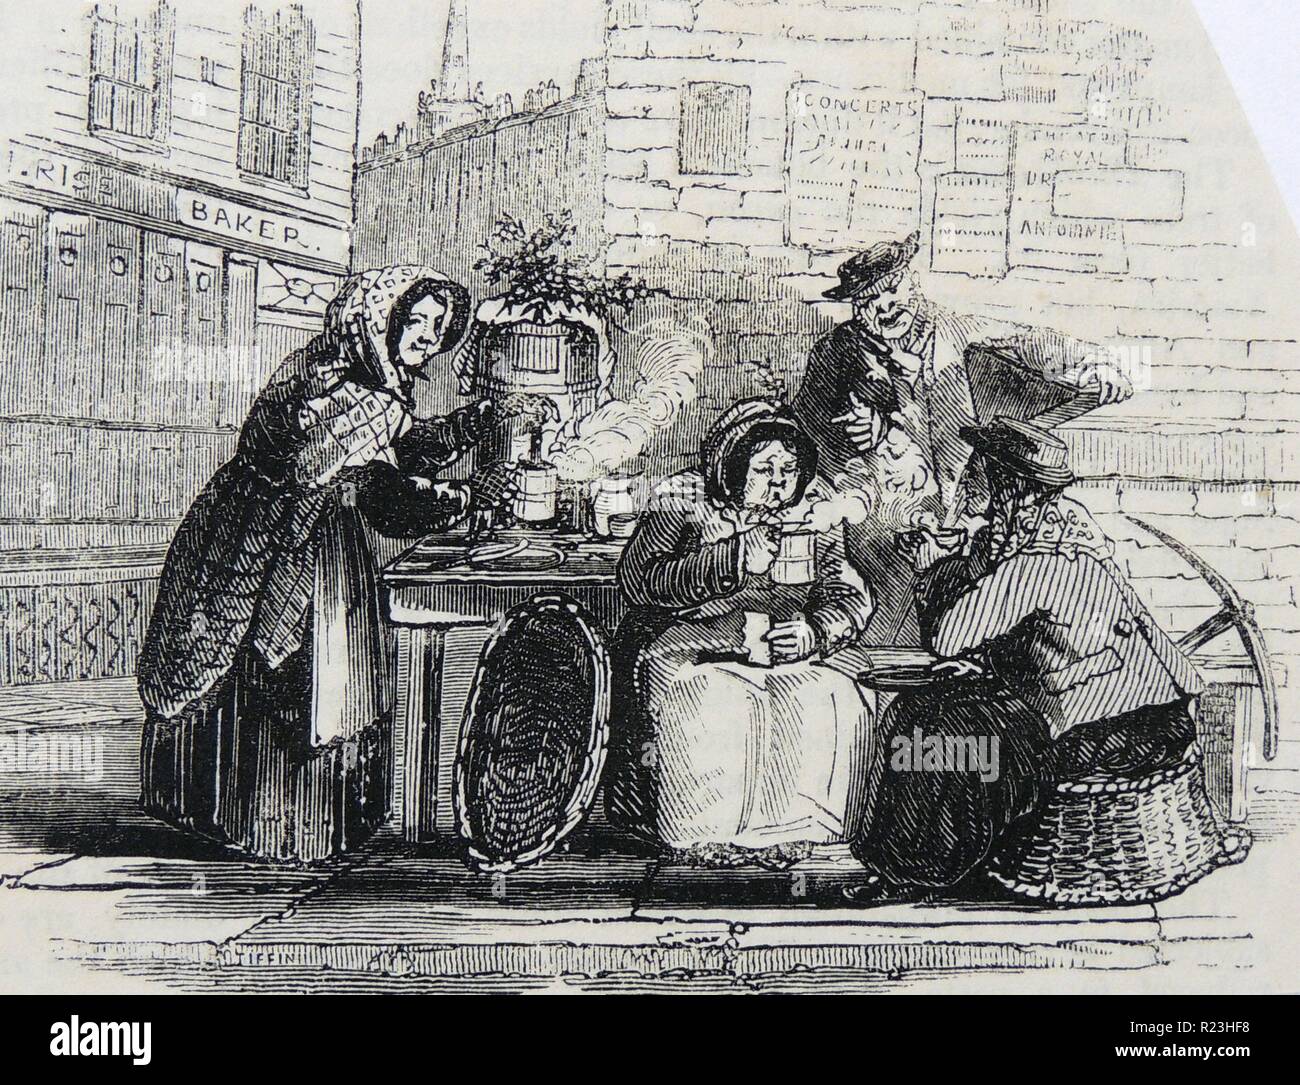 Street coffee stall, London, England. Engraving, 1850. Stock Photo